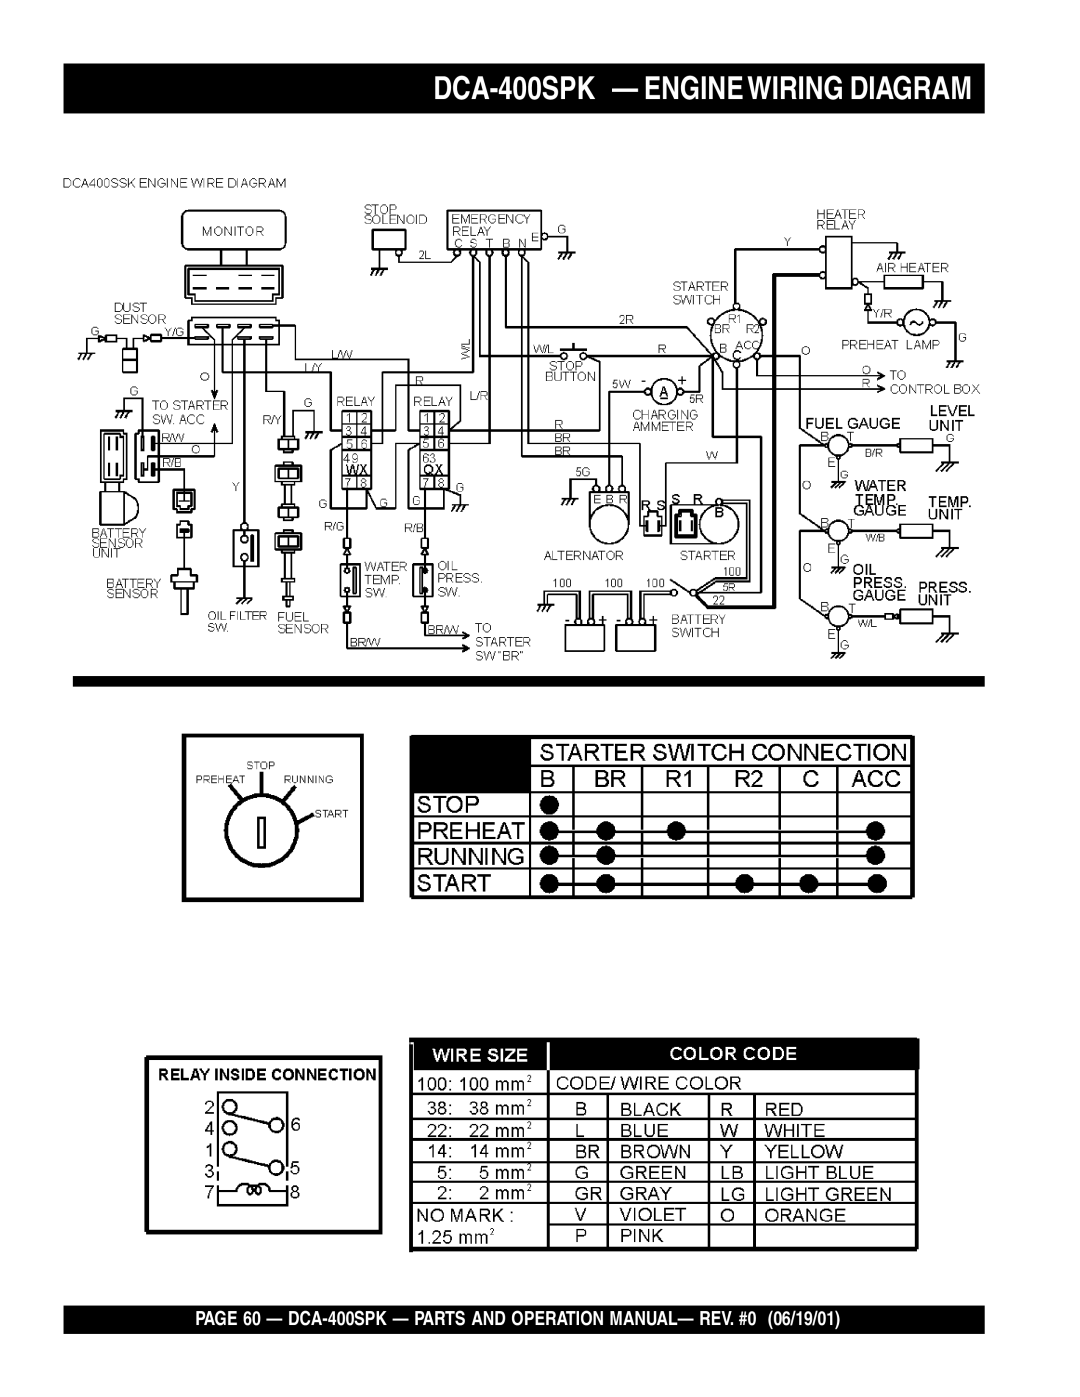 Multiquip operation manual DCA-400SPK— ENGINE WIRING DIAGRAM 